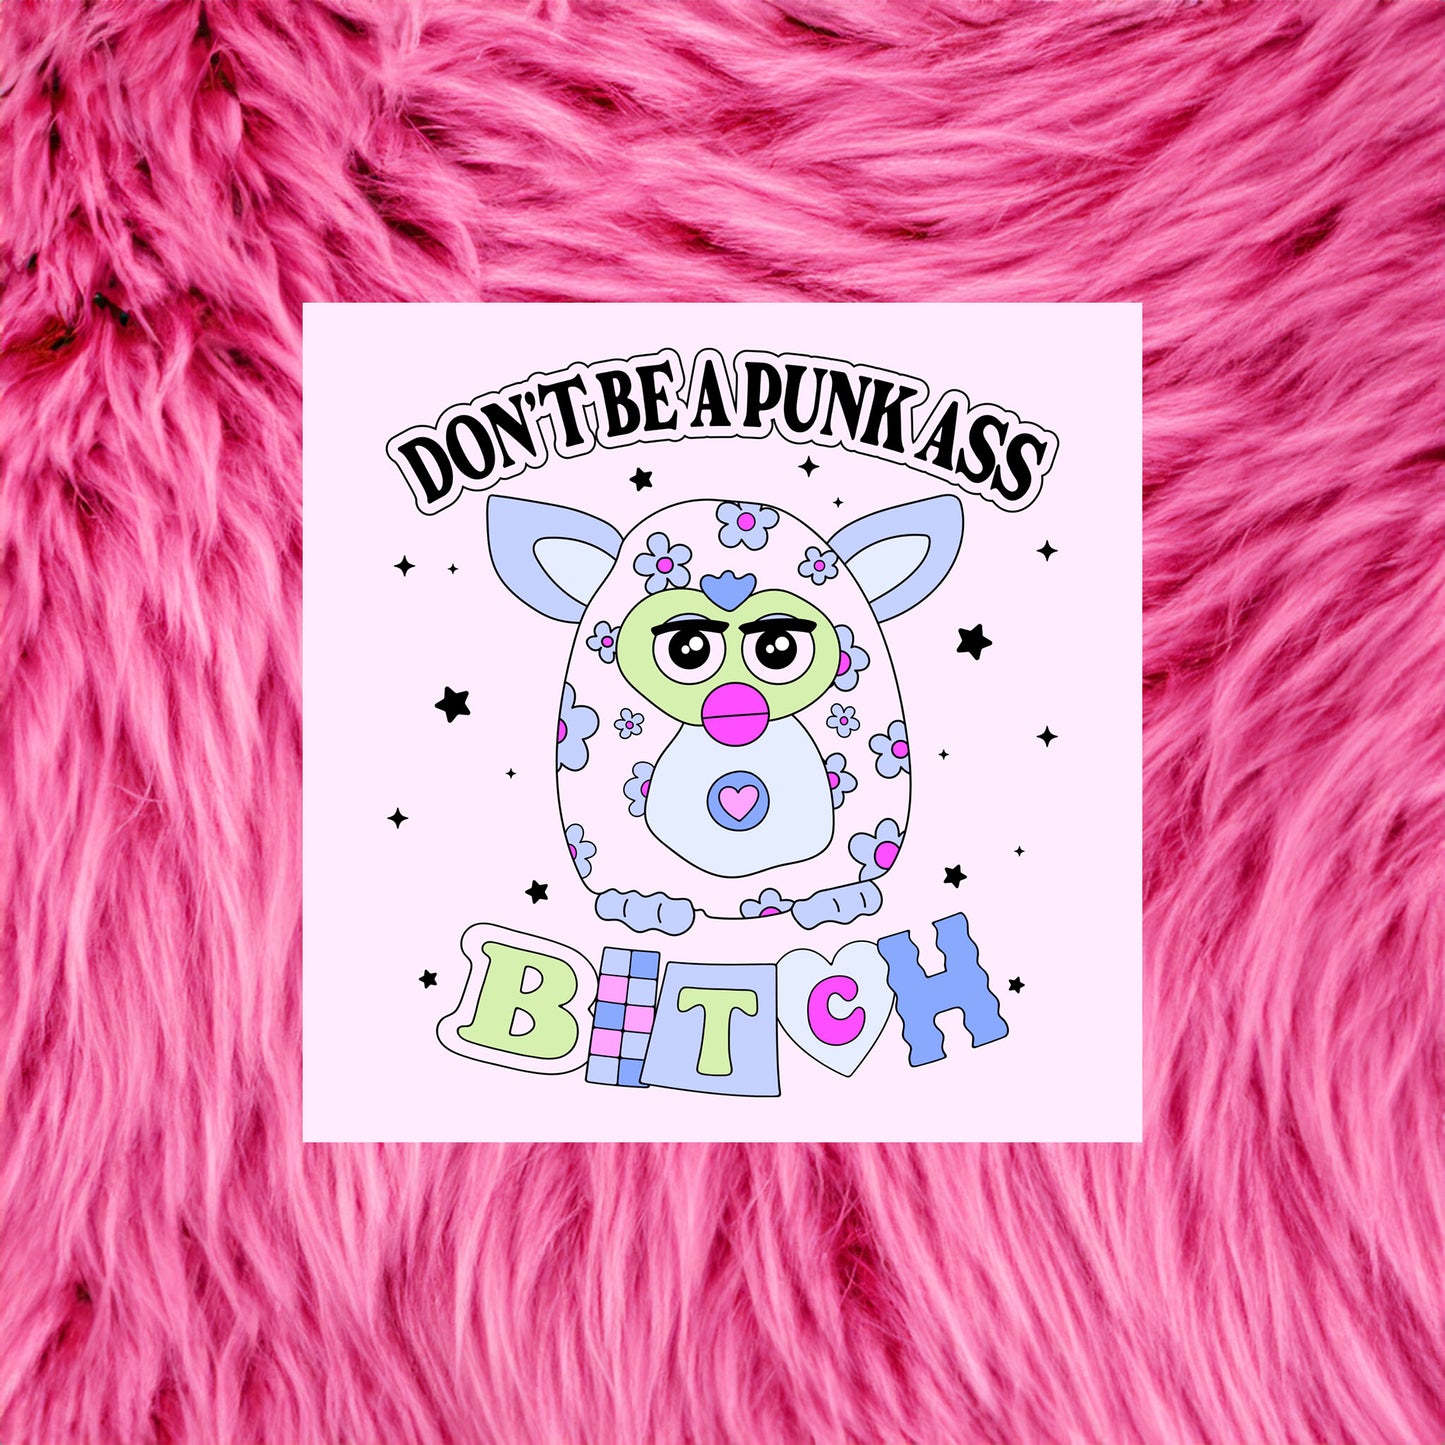 Furby Don't Be a Punk A$s B*tch Sticker